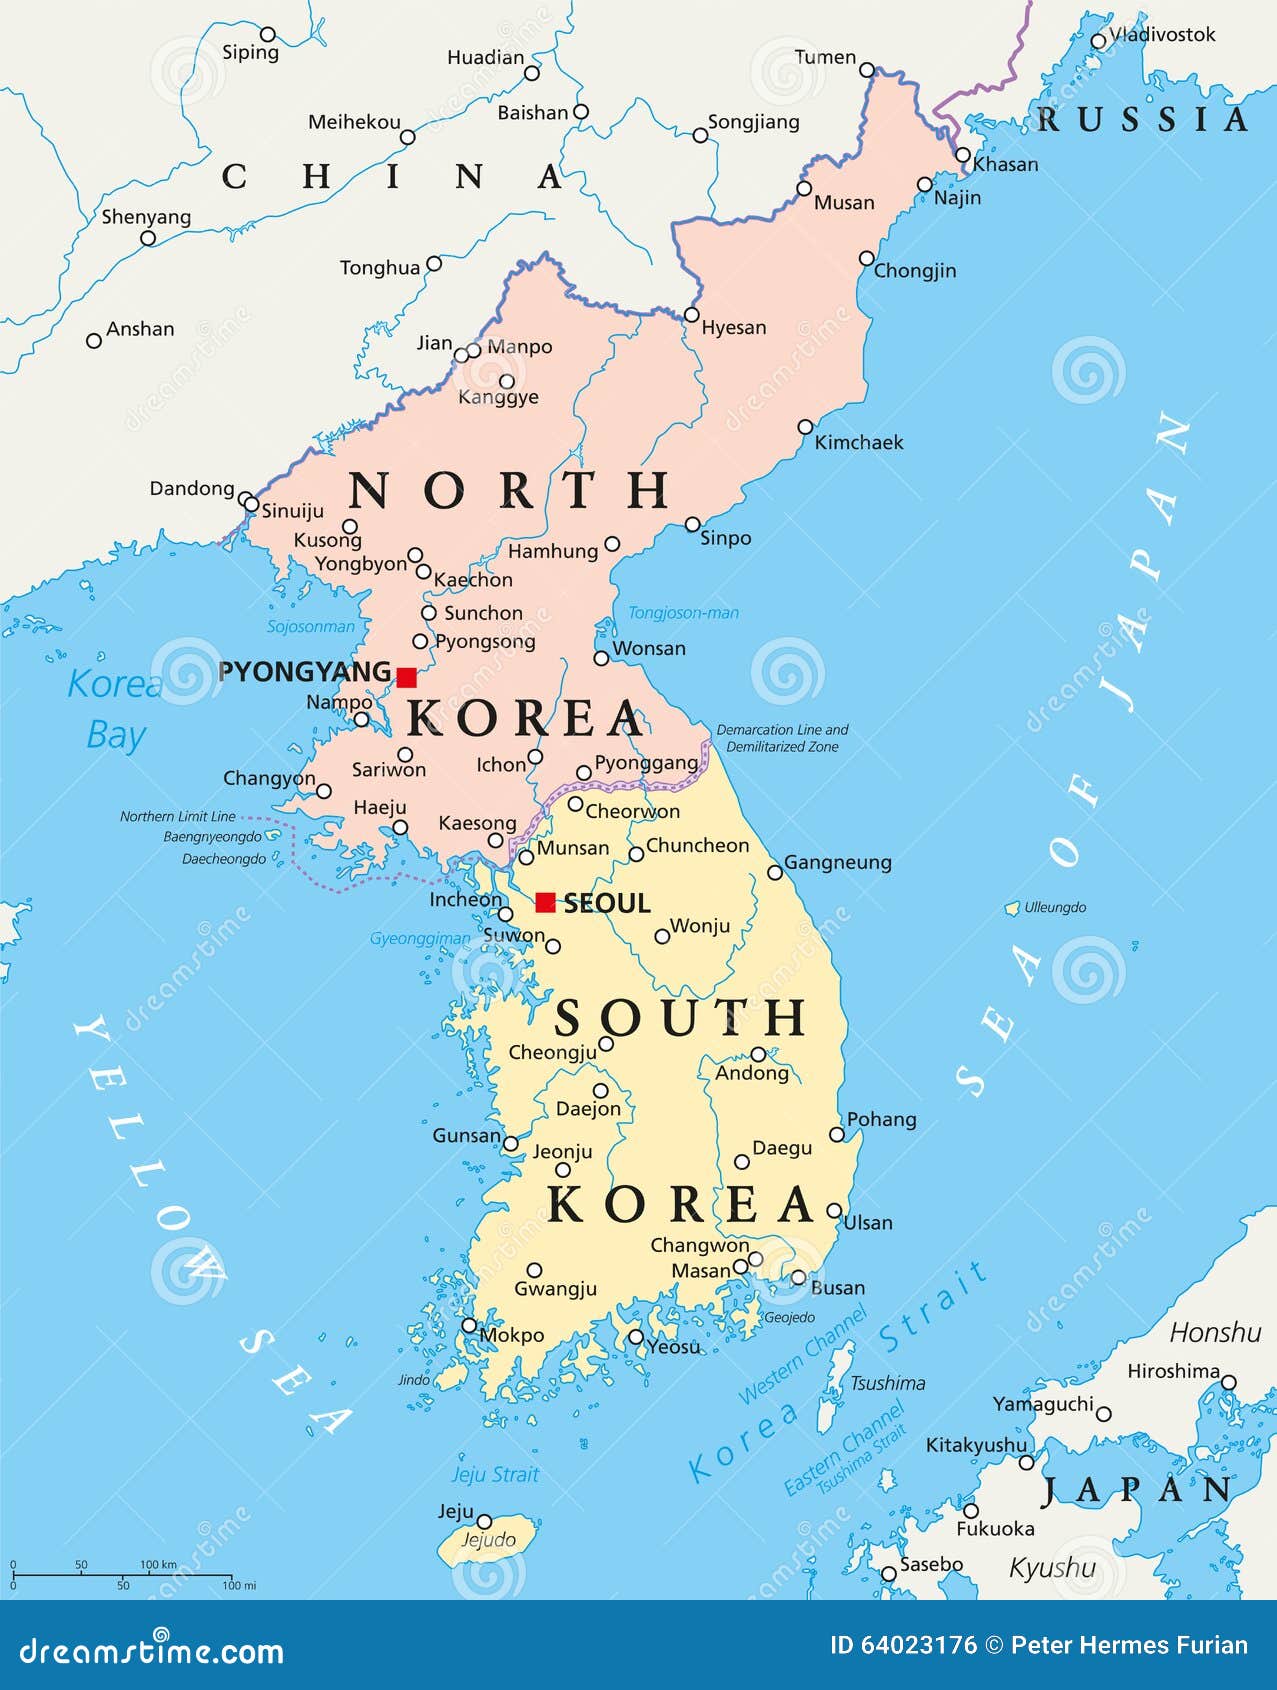 North Korea And South Korea Political Map Stock Vector - Image: 64023176